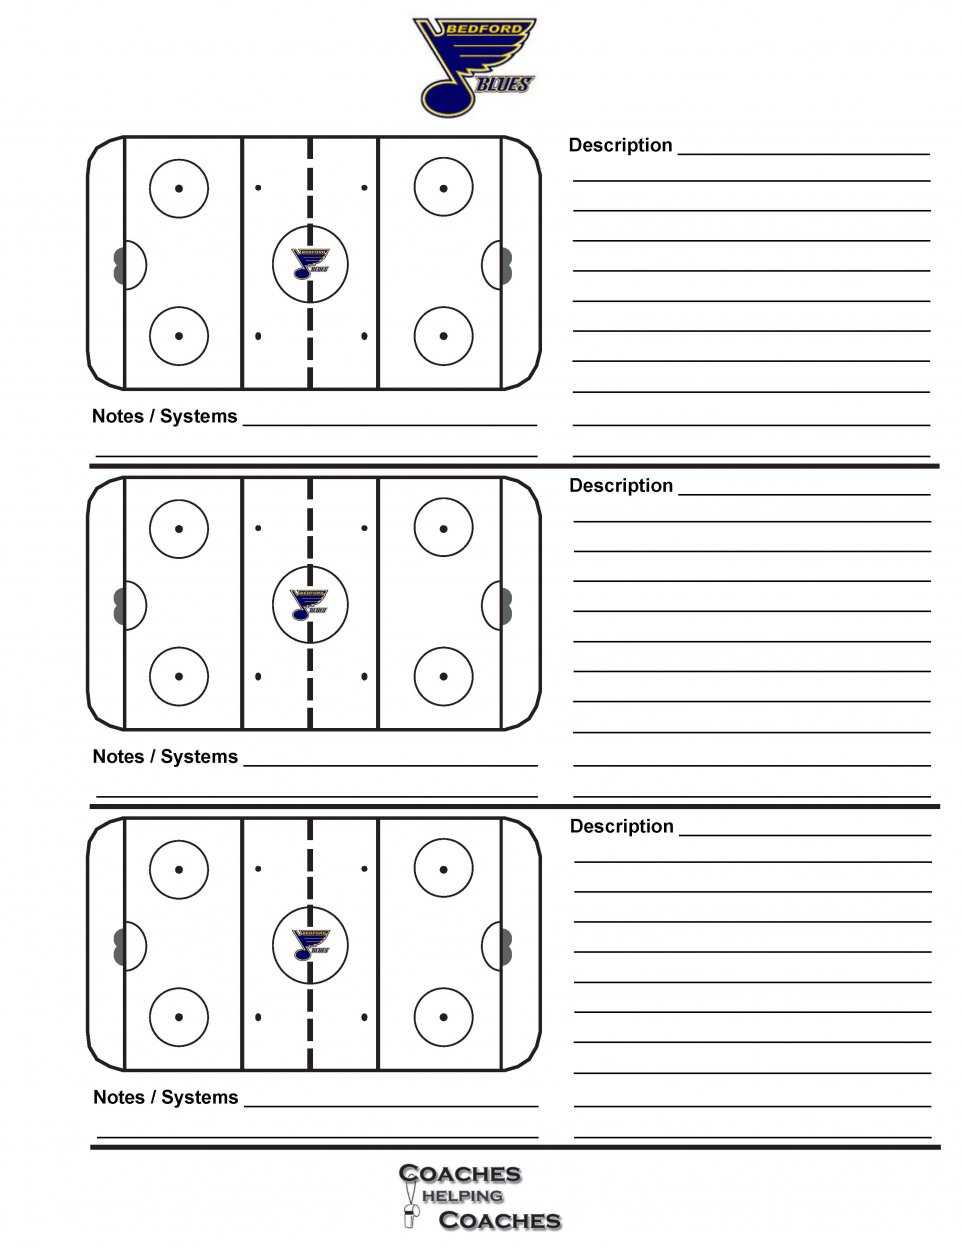 Bedford Minor Hockey Association Hockey Poweredgoalline.ca With Regard To Blank Hockey Practice Plan Template